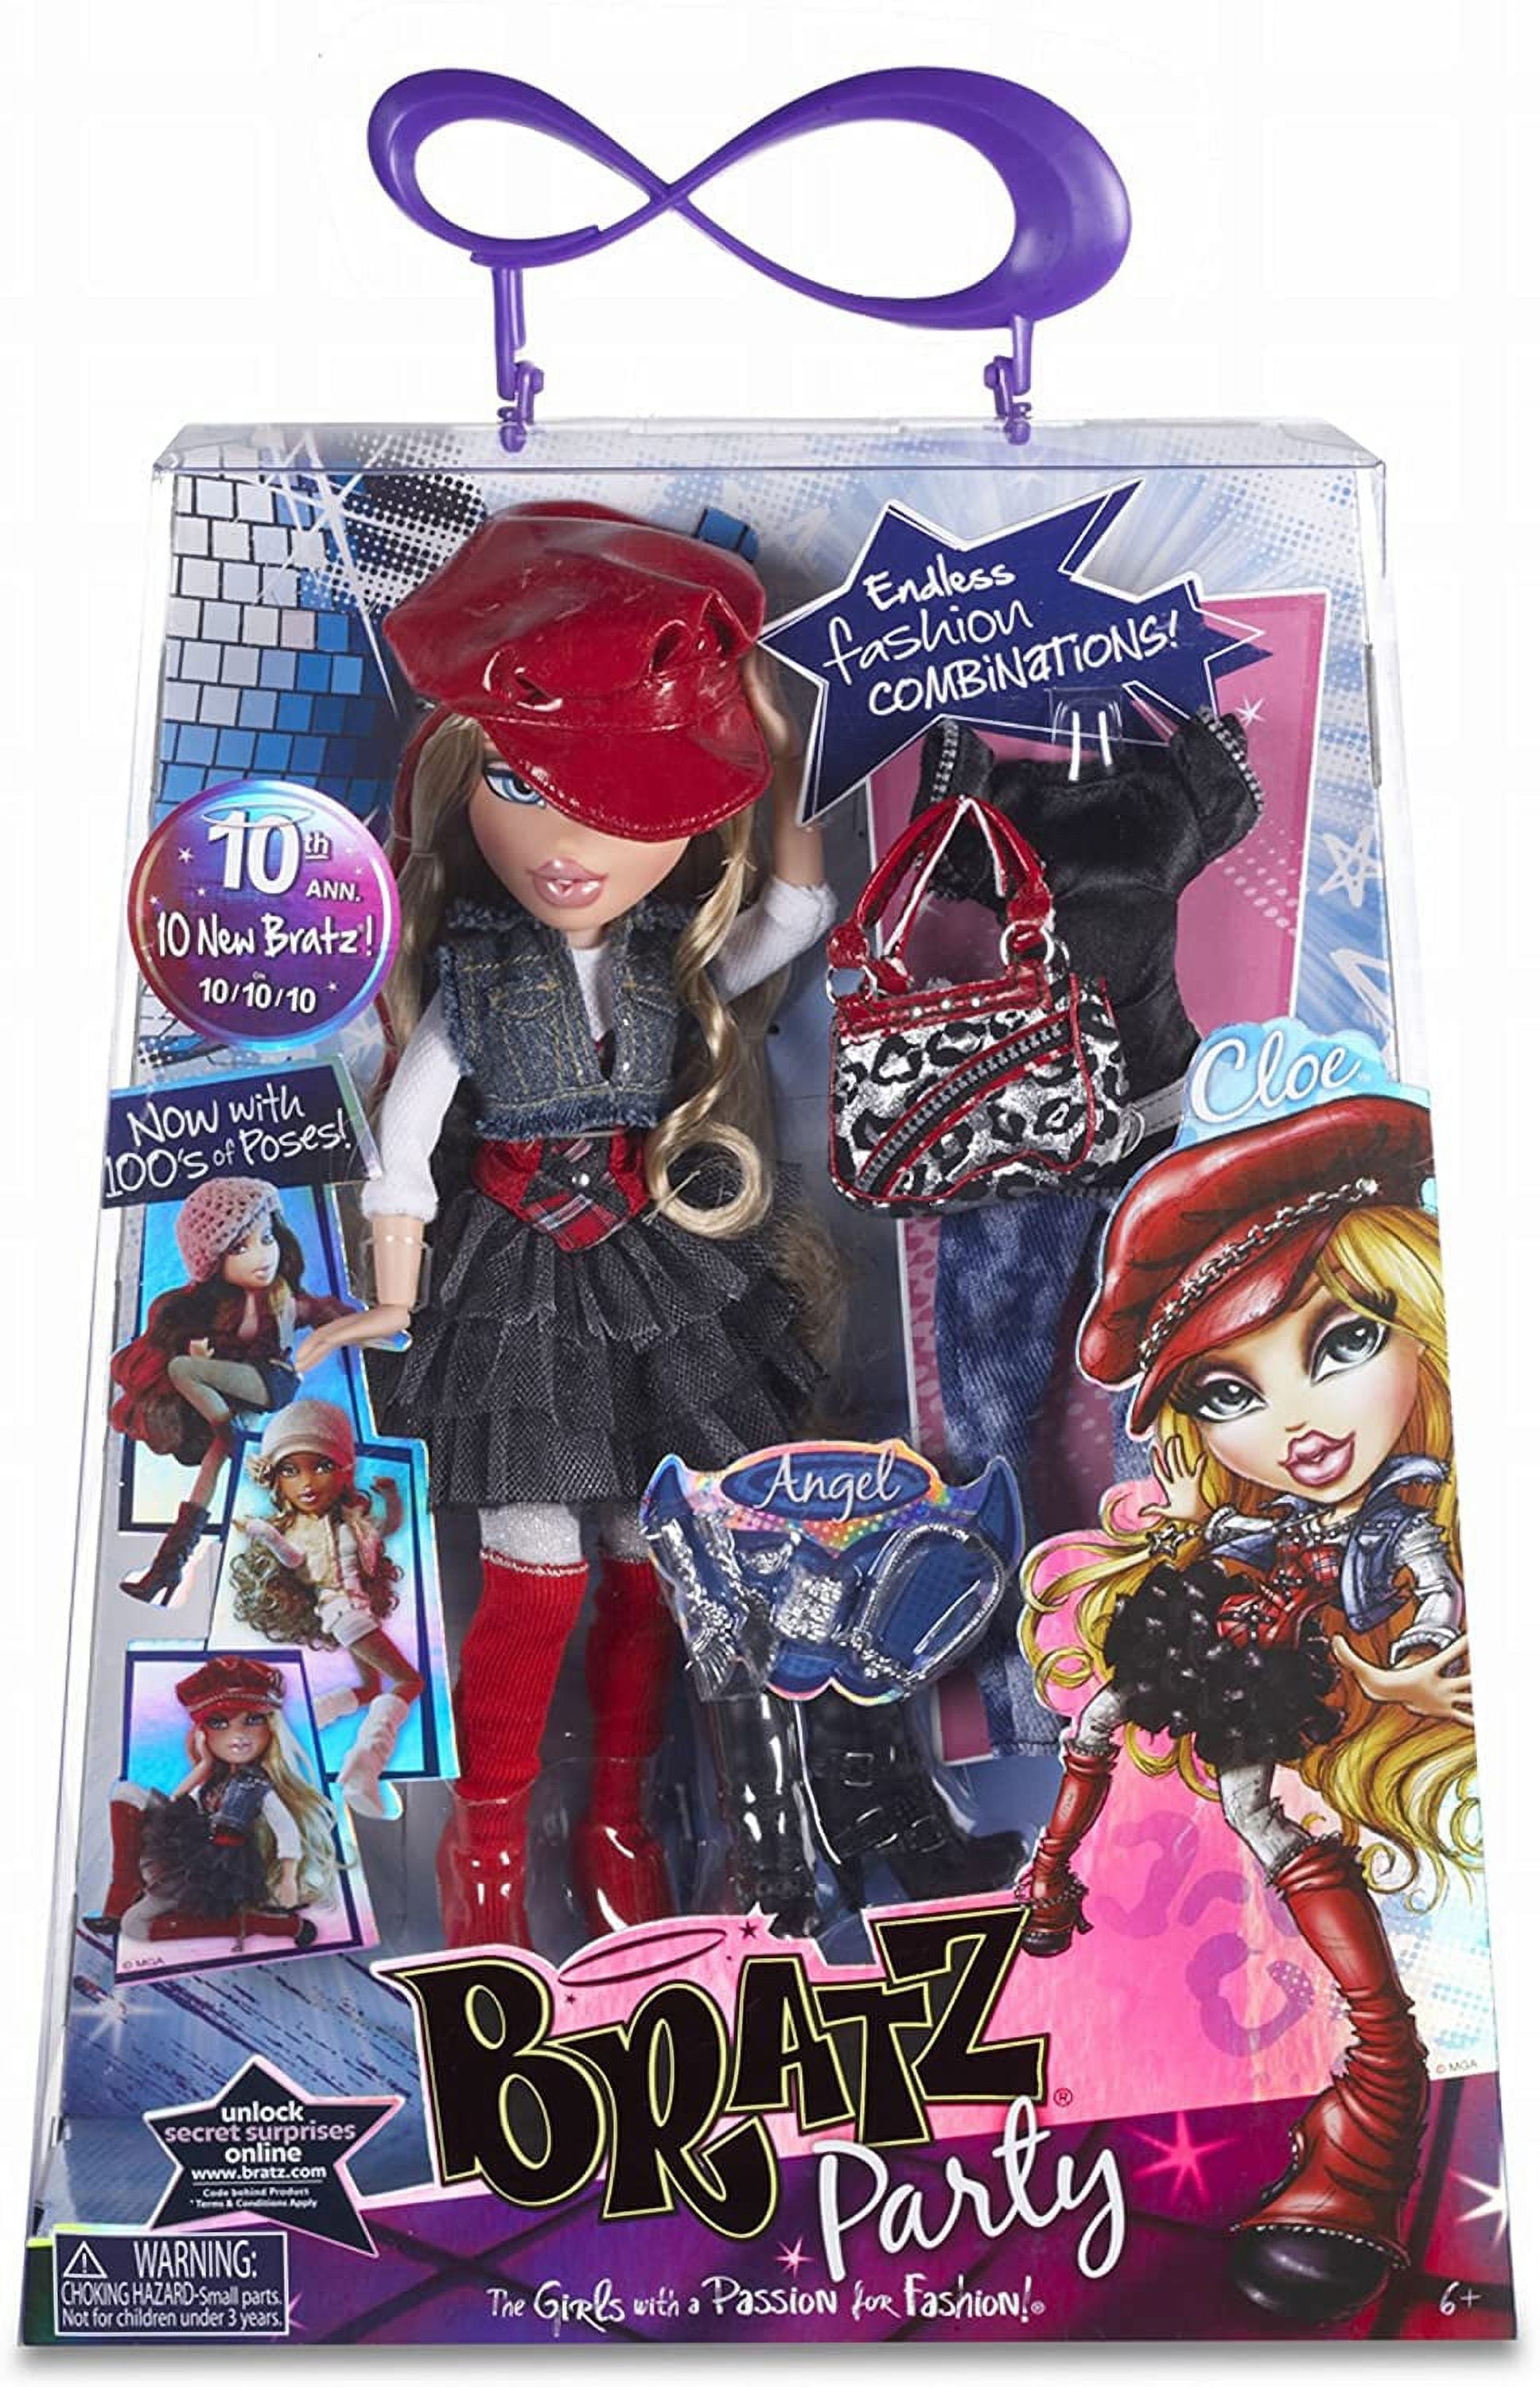 BRATZ Party Cloe Articulated Doll 10th Anniversary NEW IN BOX 10/10/10